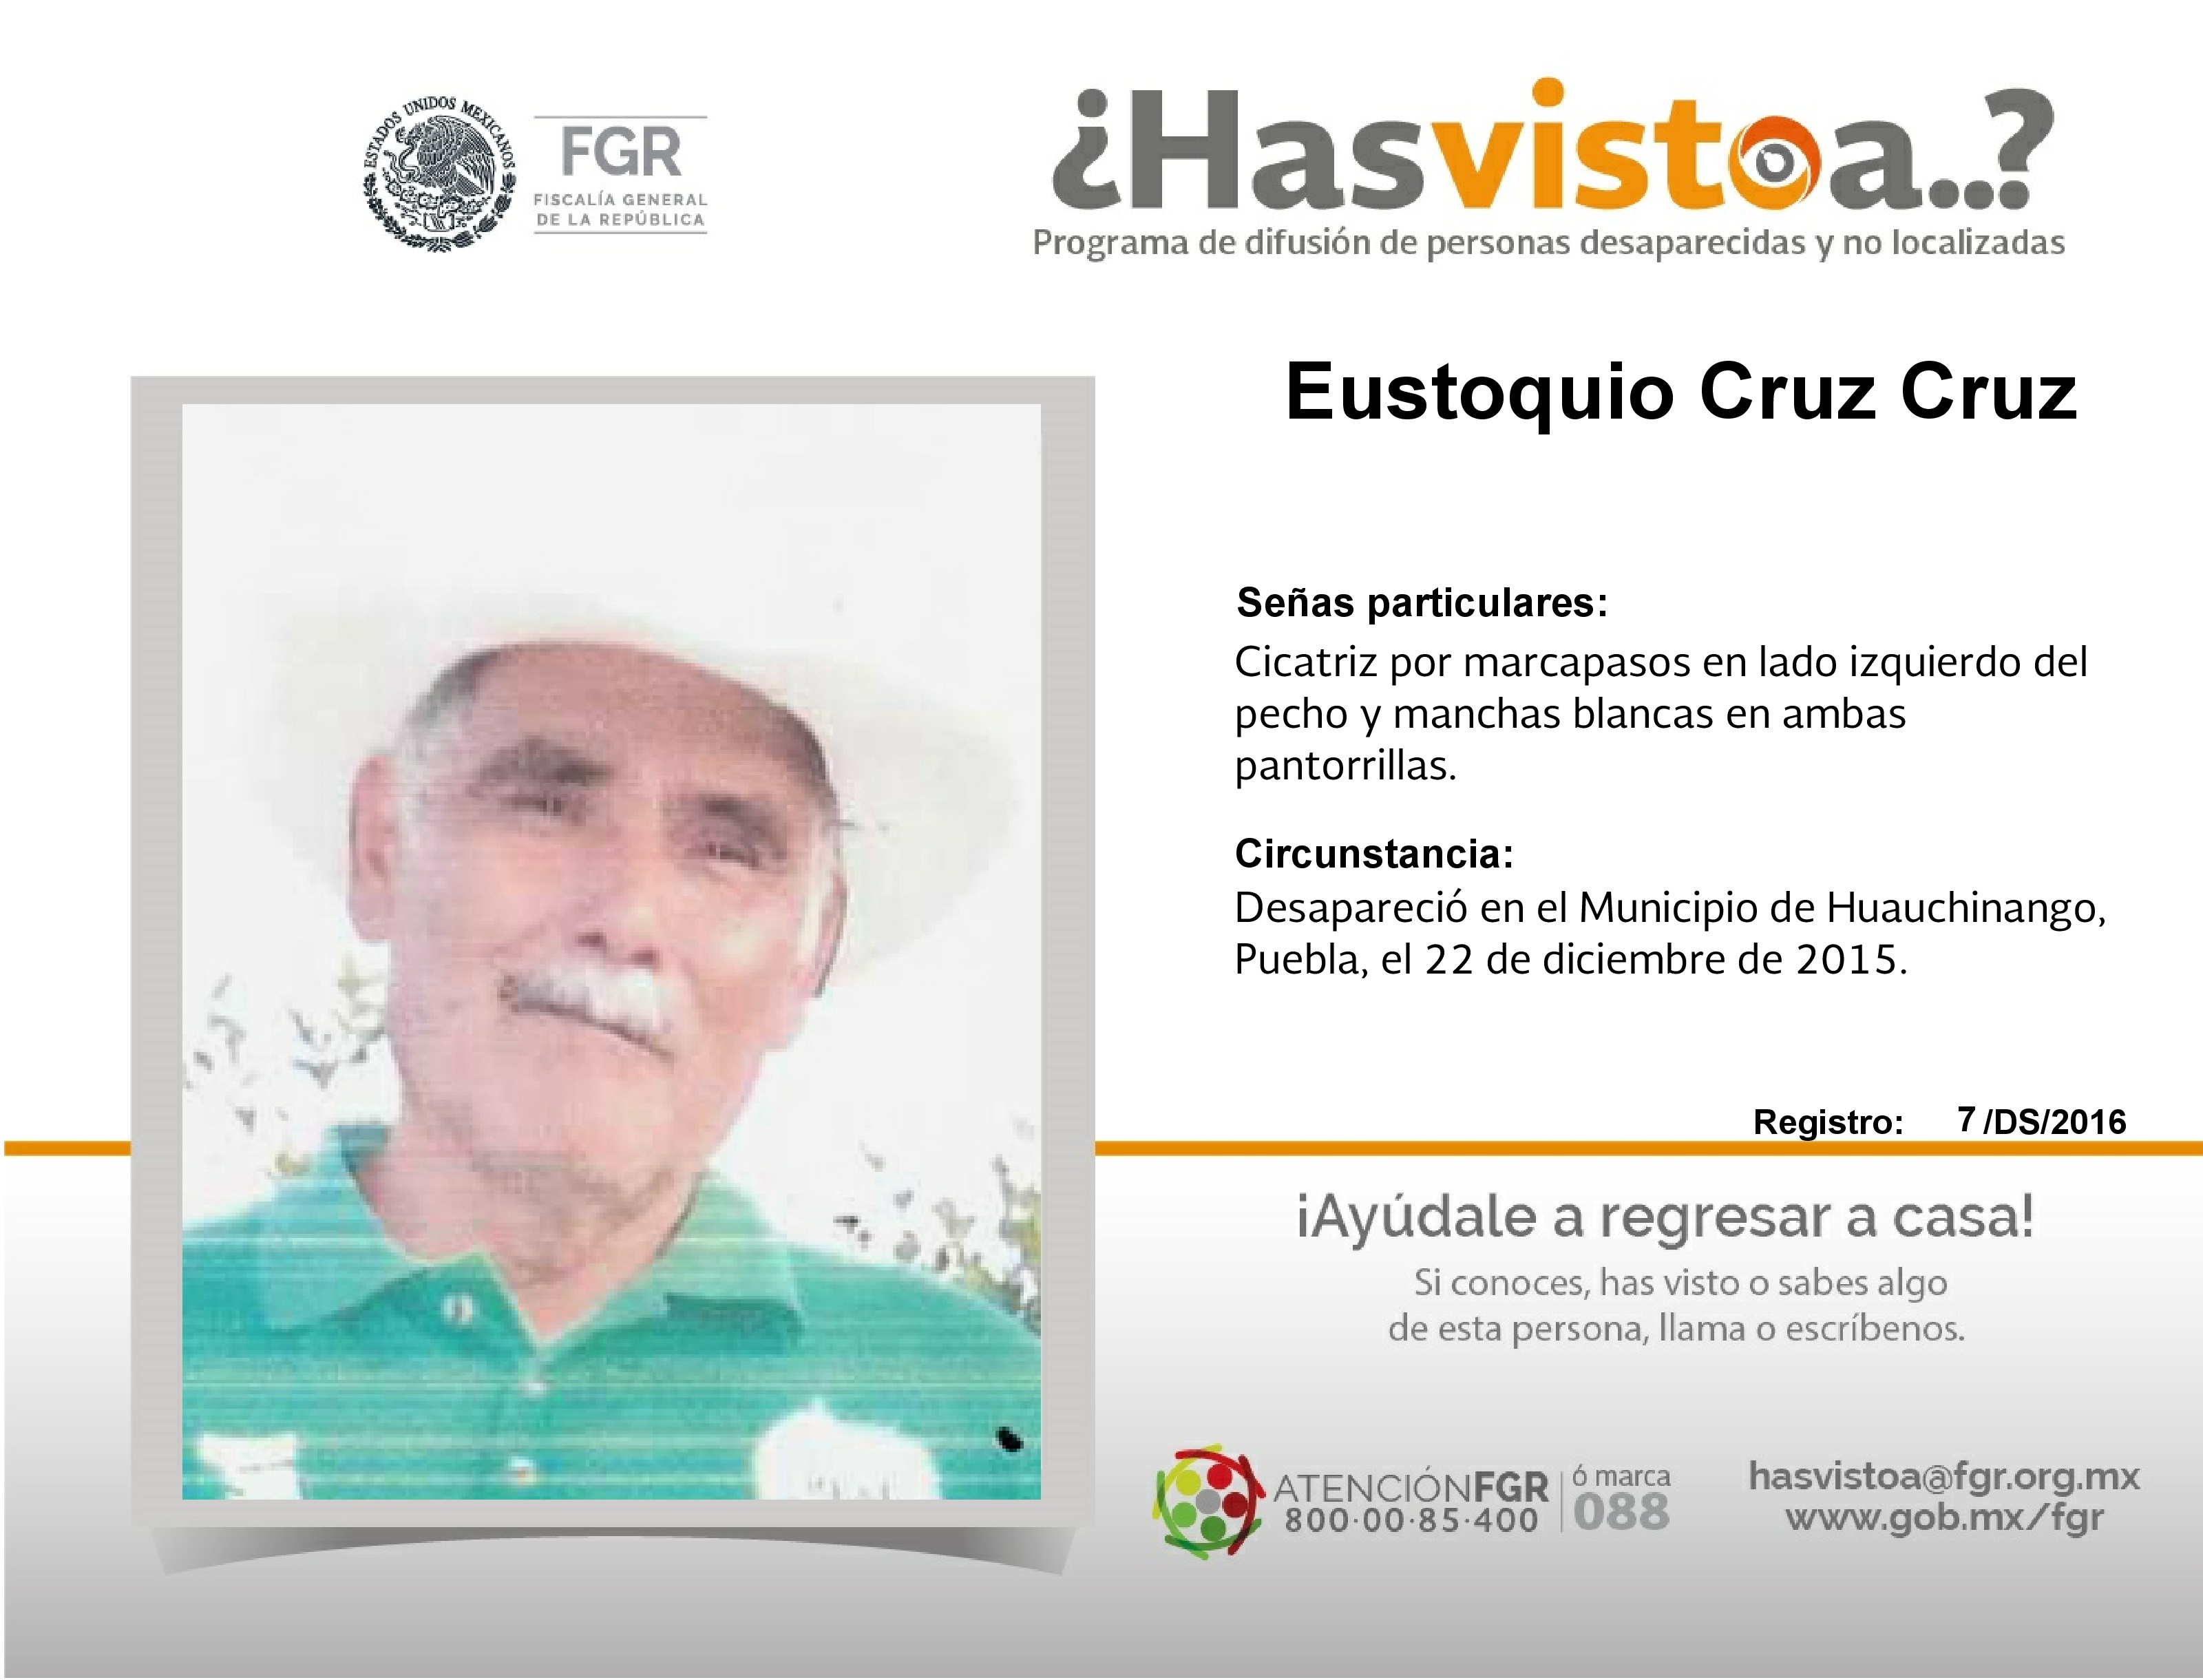 Eustoquio Cruz Cruz desapareció en Huauchinango